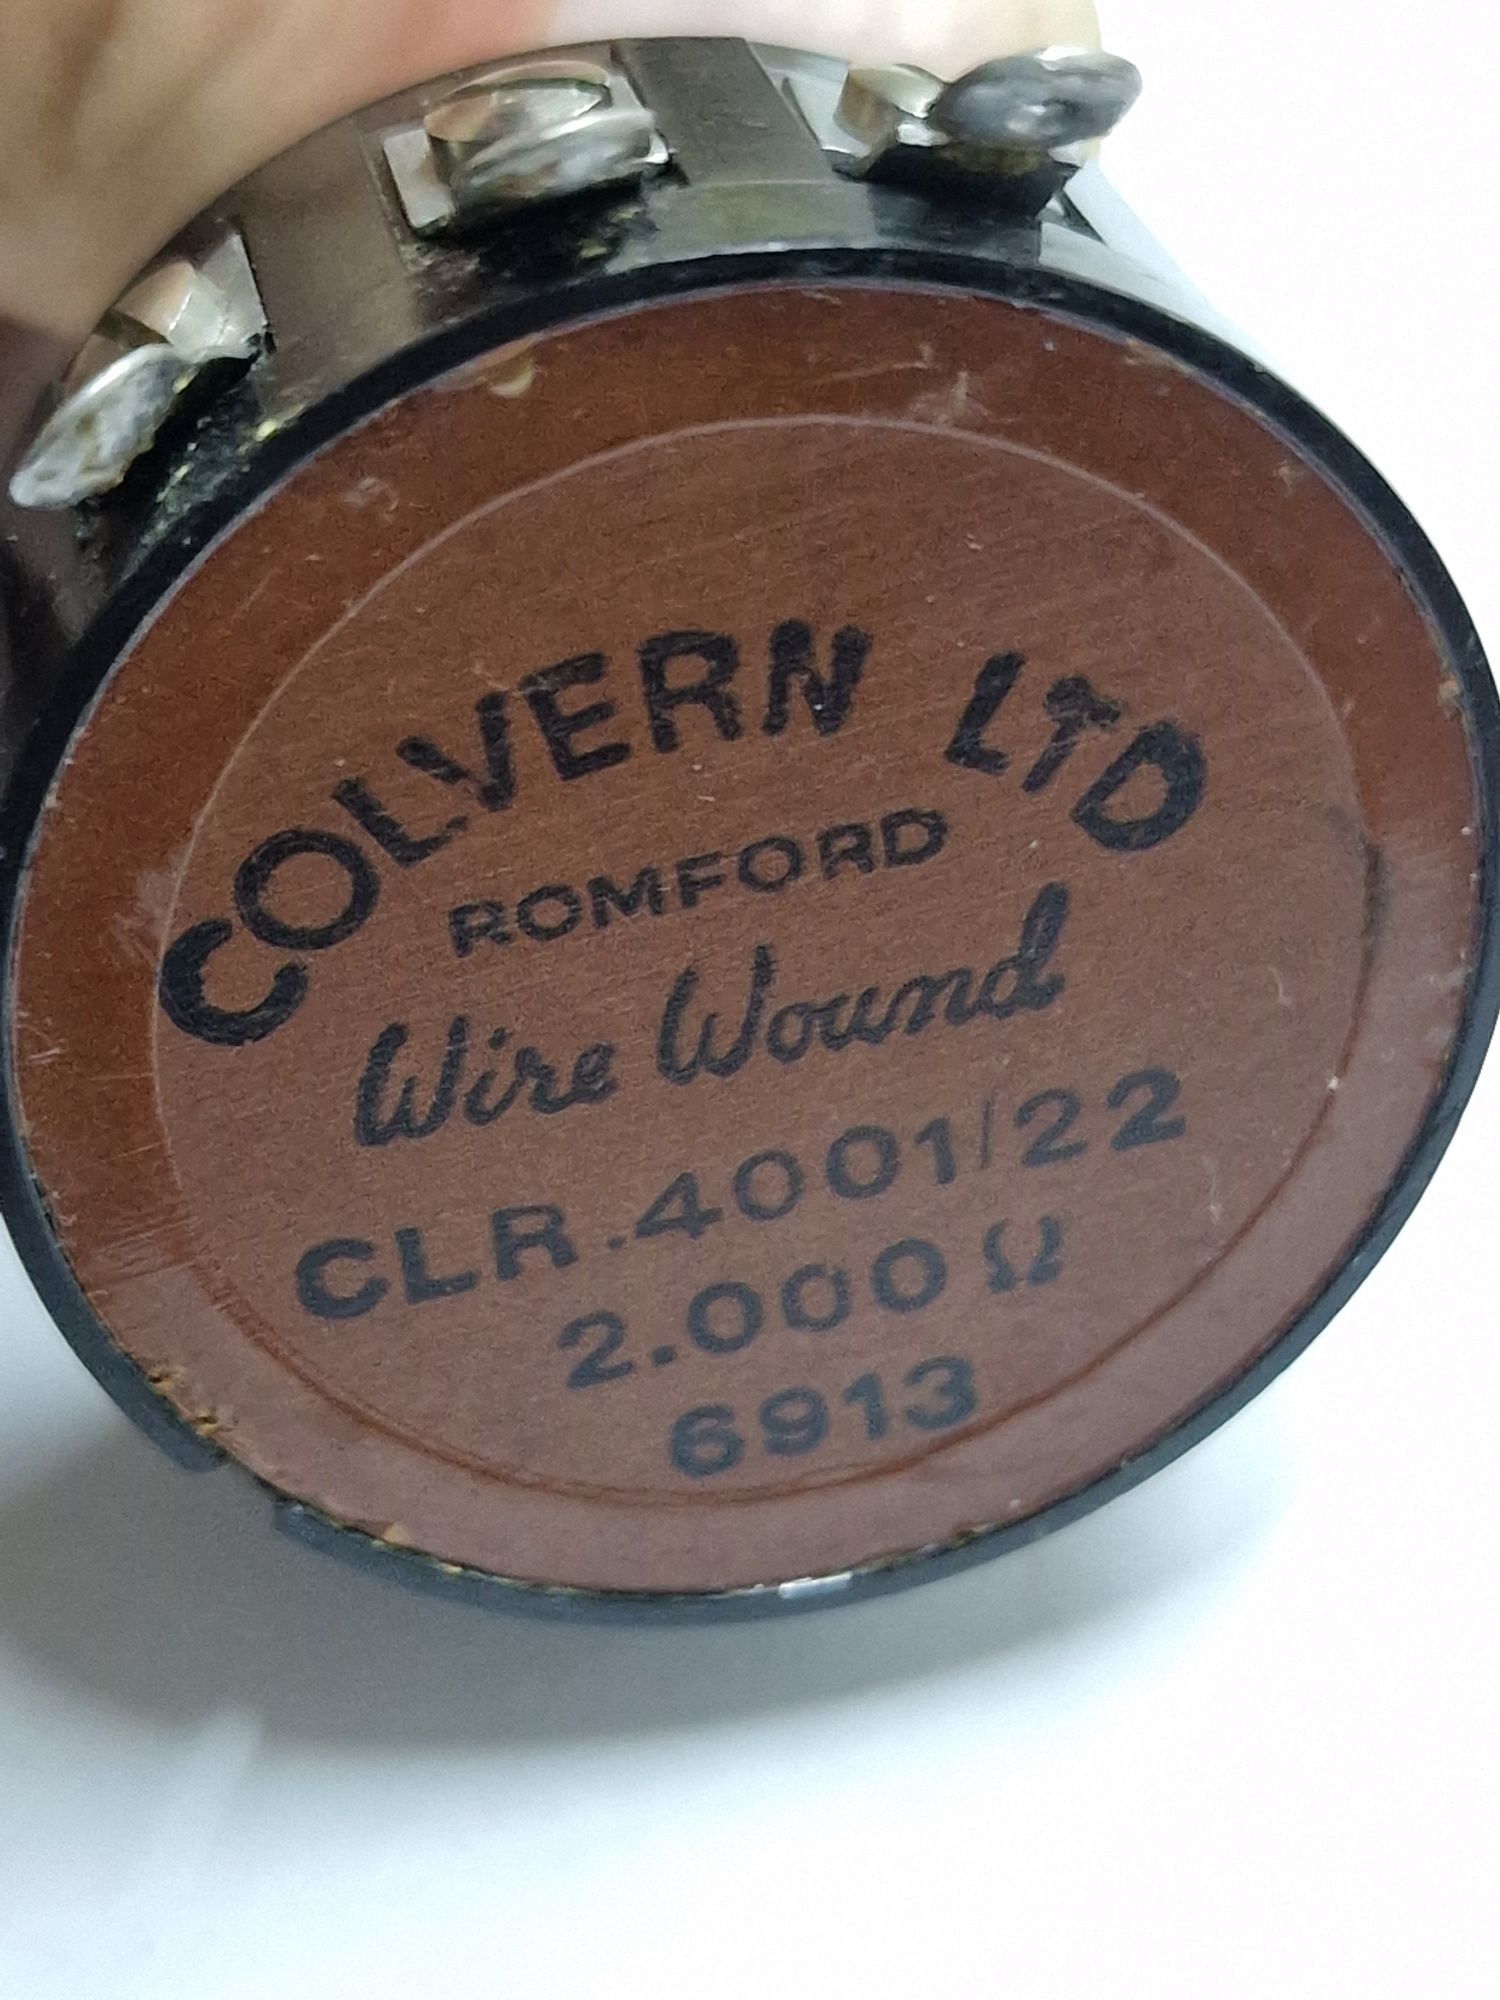 #18   Retro potencjometr Colvern CLR 4001/22